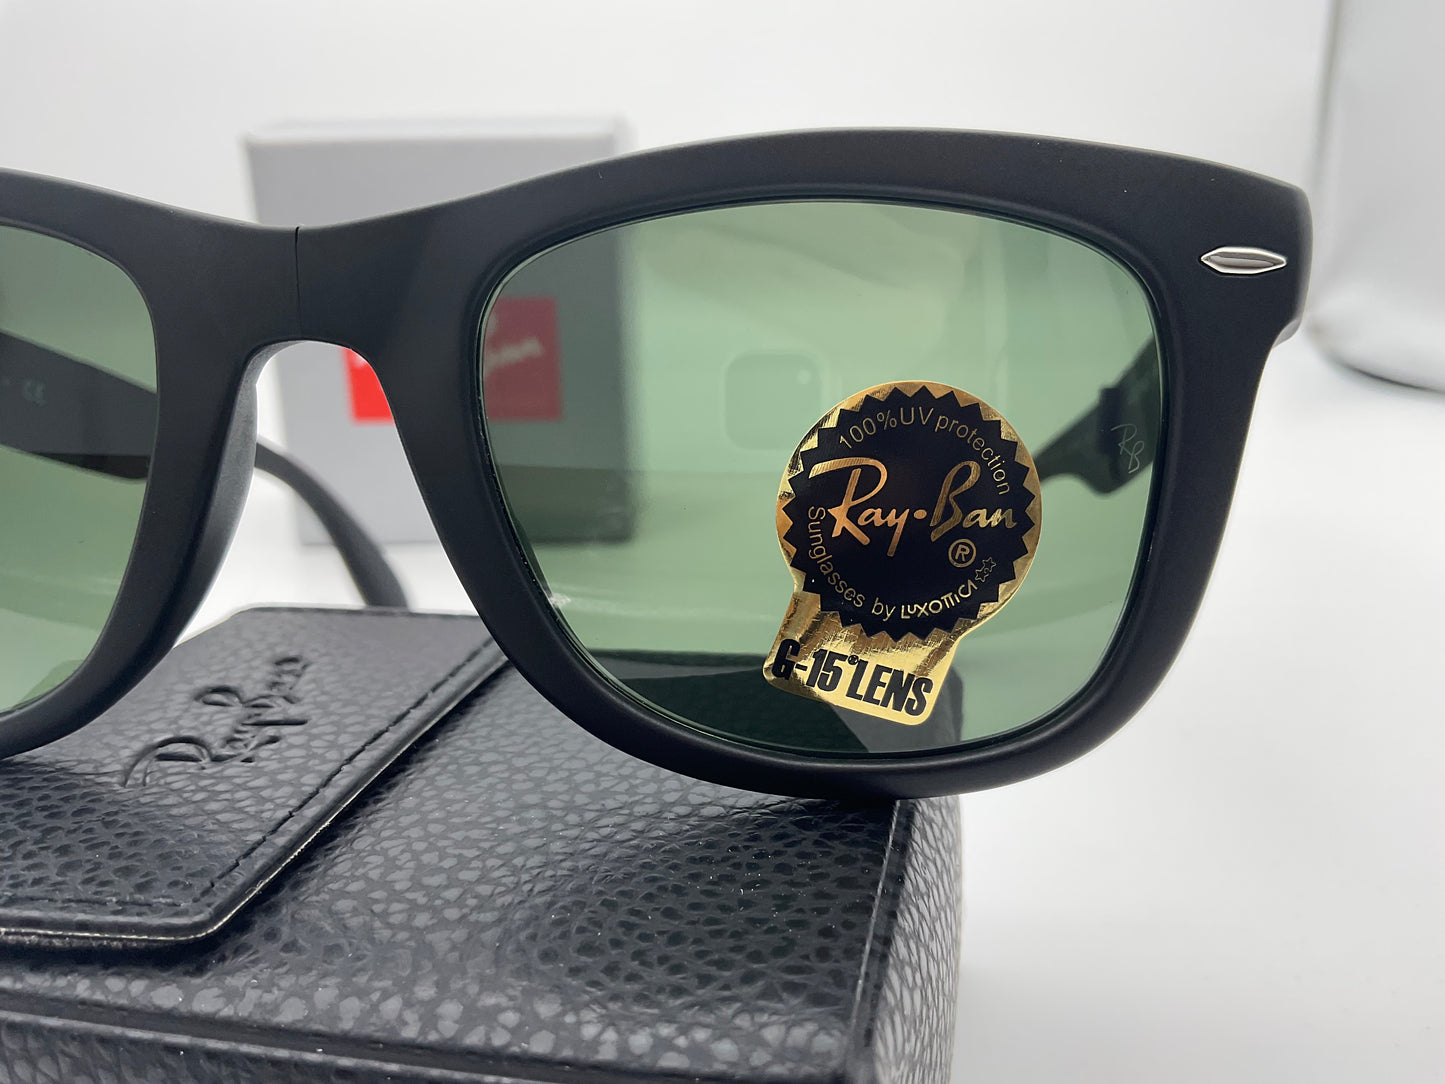 Ray-Ban Folding Wayfarer 50mm Matte Black Frame Sunglasses RB4105 601-s made in Italy